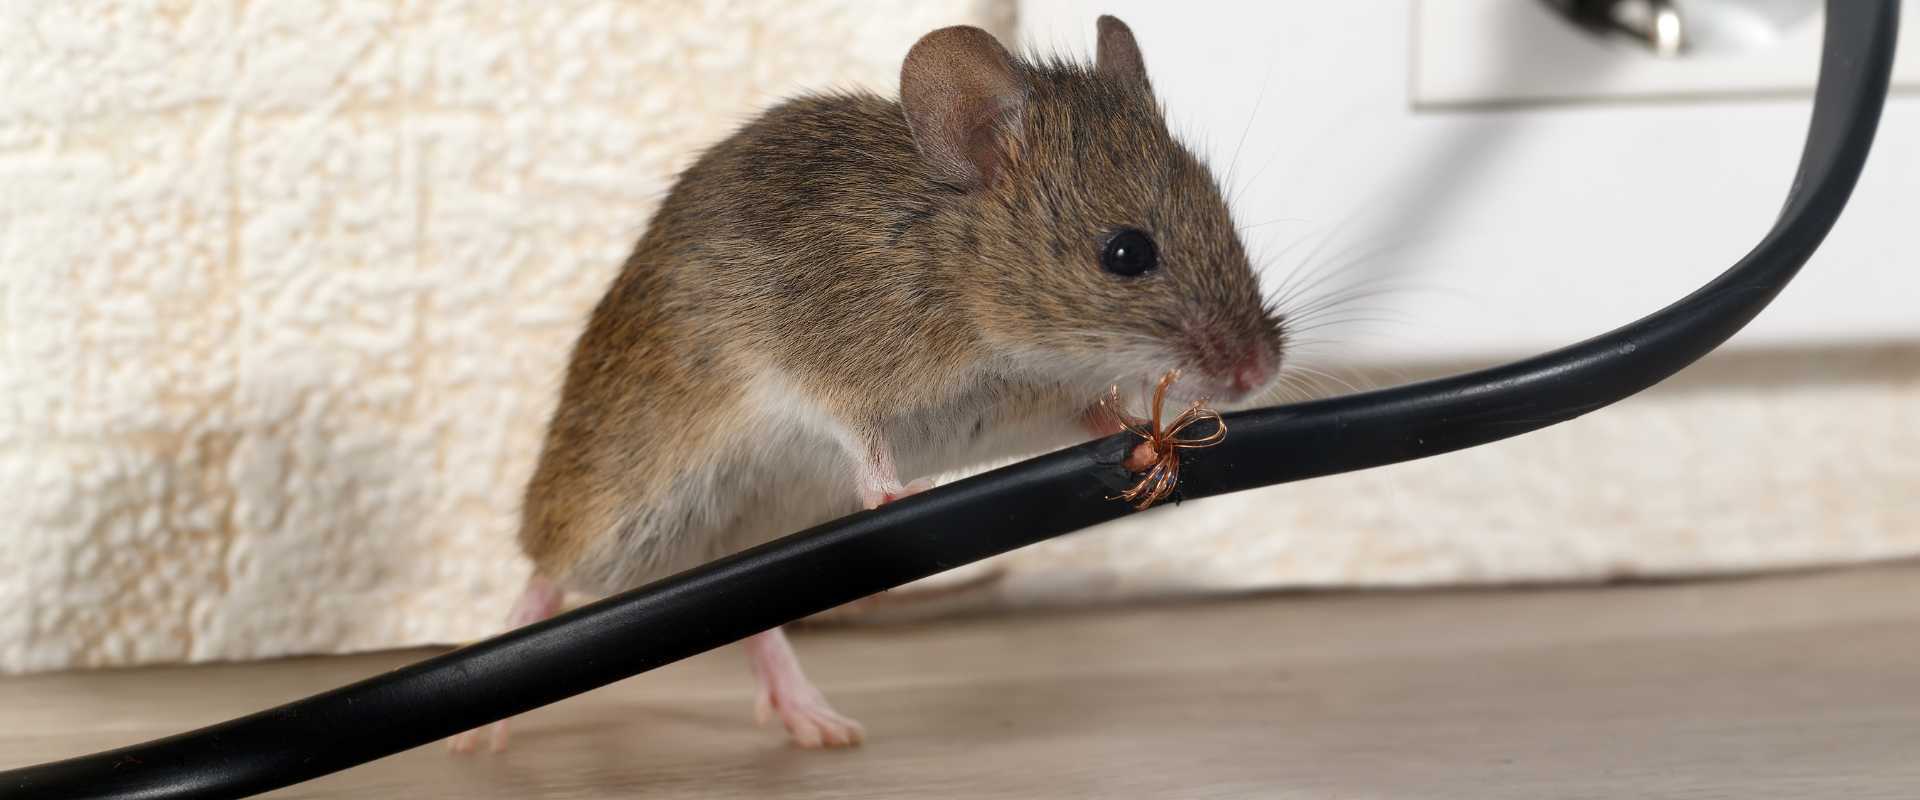 mouse exterminator